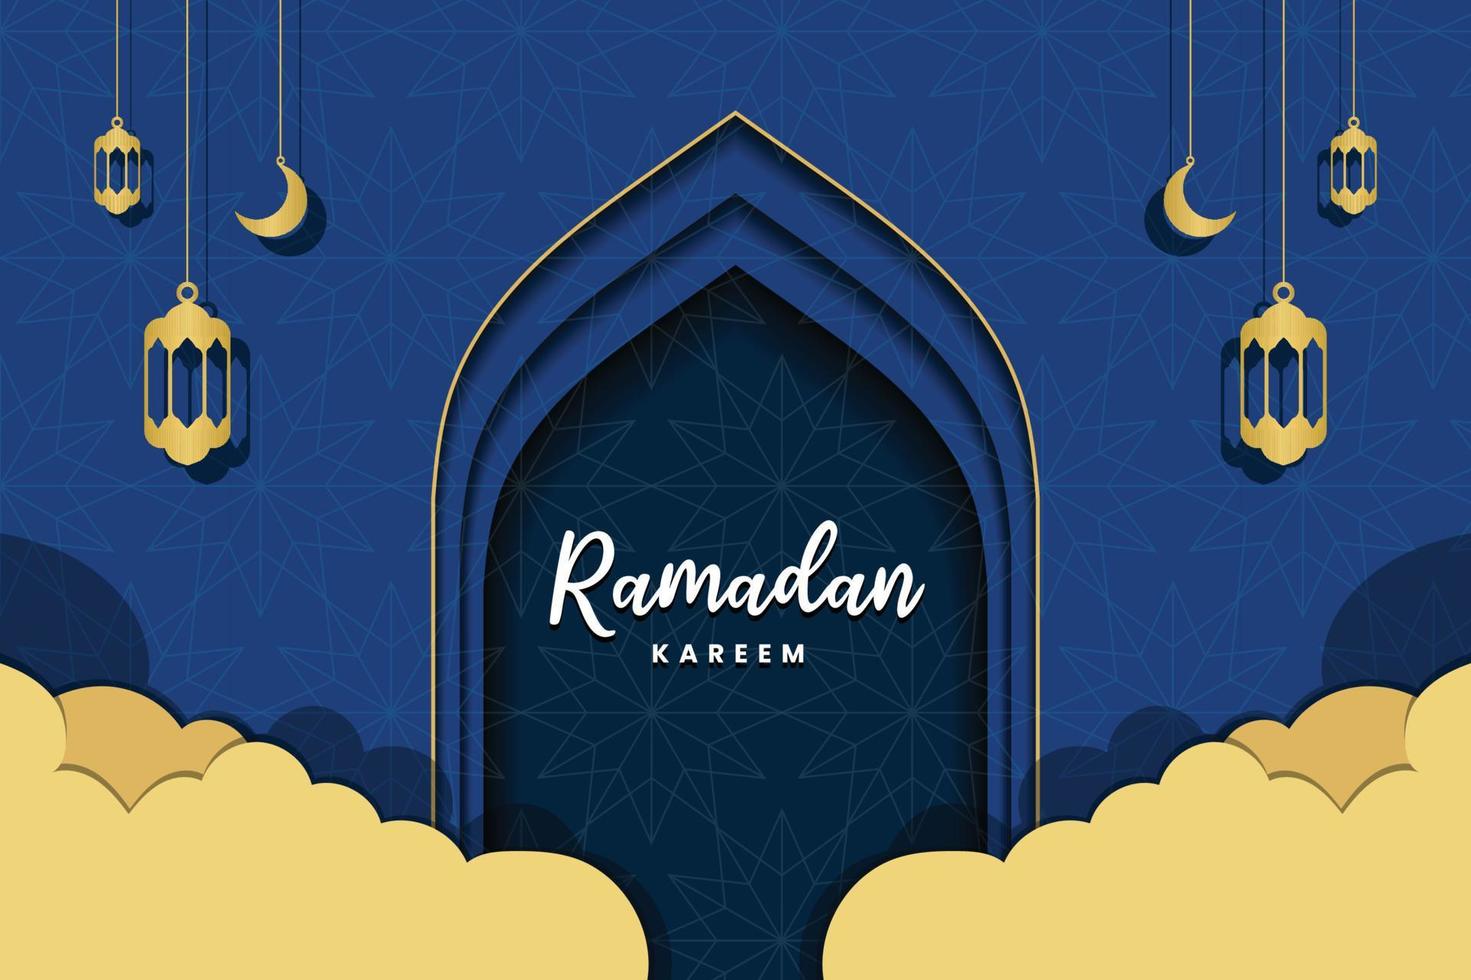 publicación de redes sociales de Ramadán vector